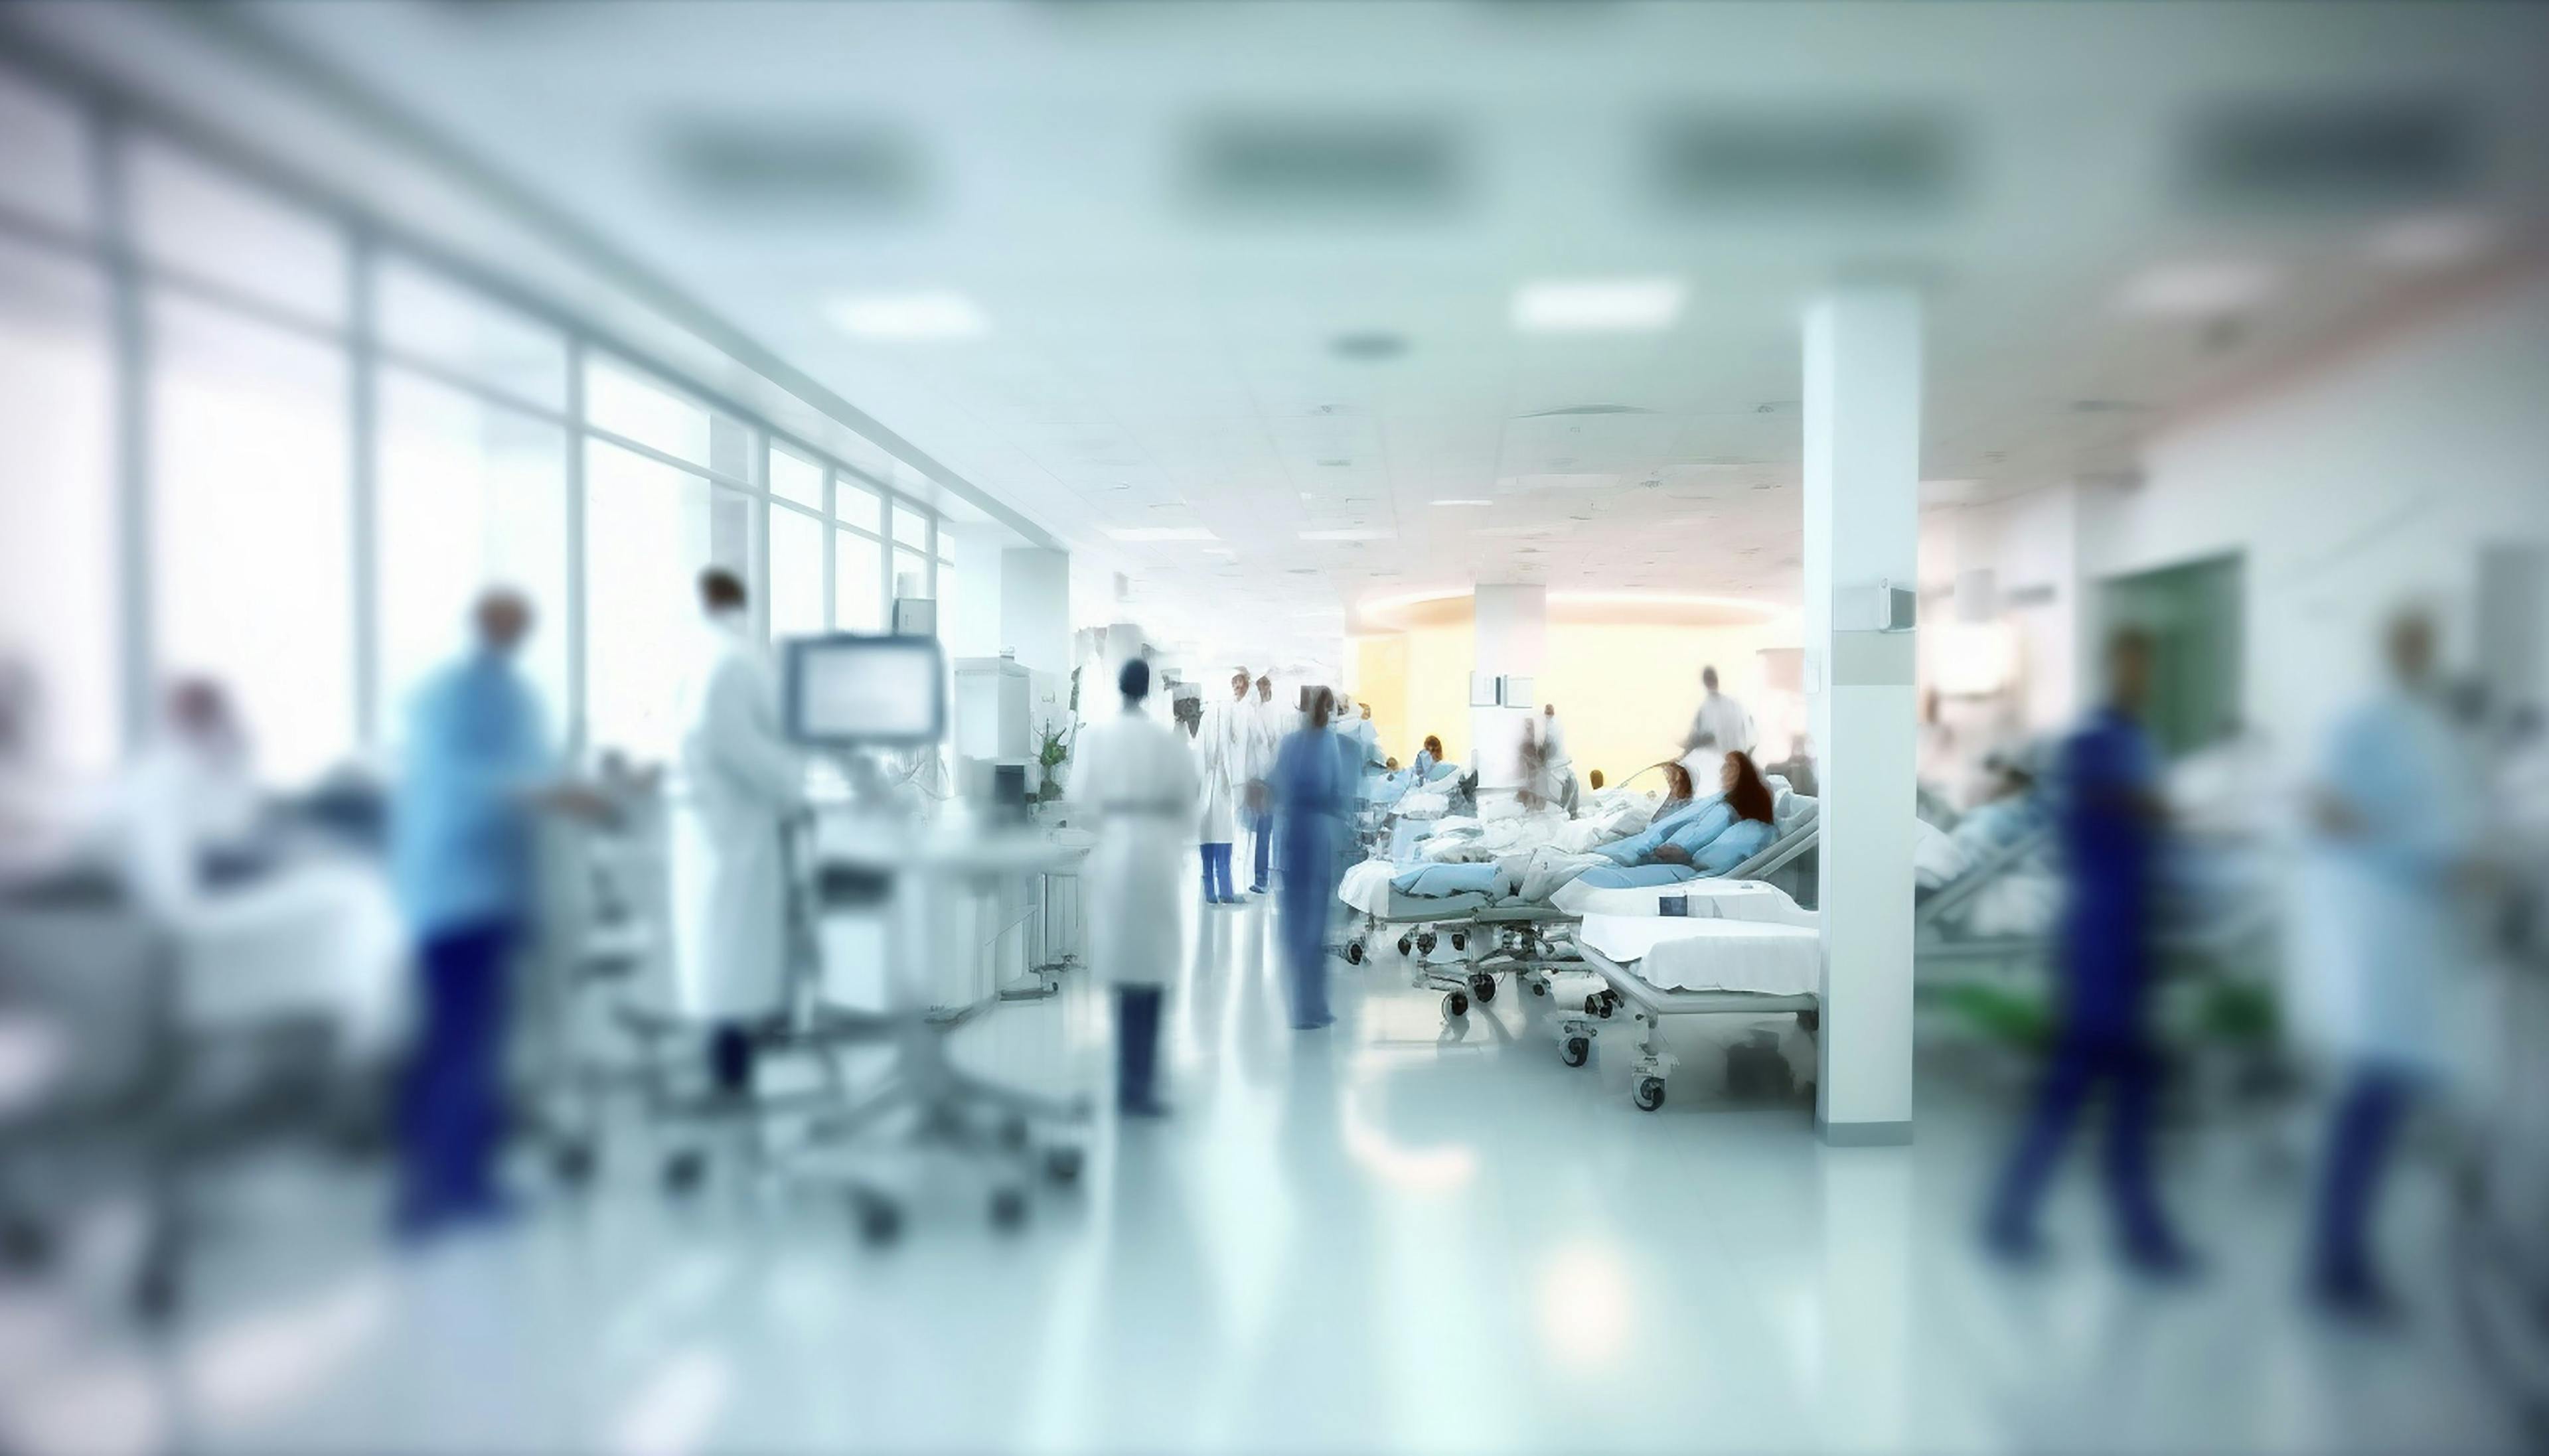 Blurry hospital scene -- Image credit: Kurosch | stock.adobe.com